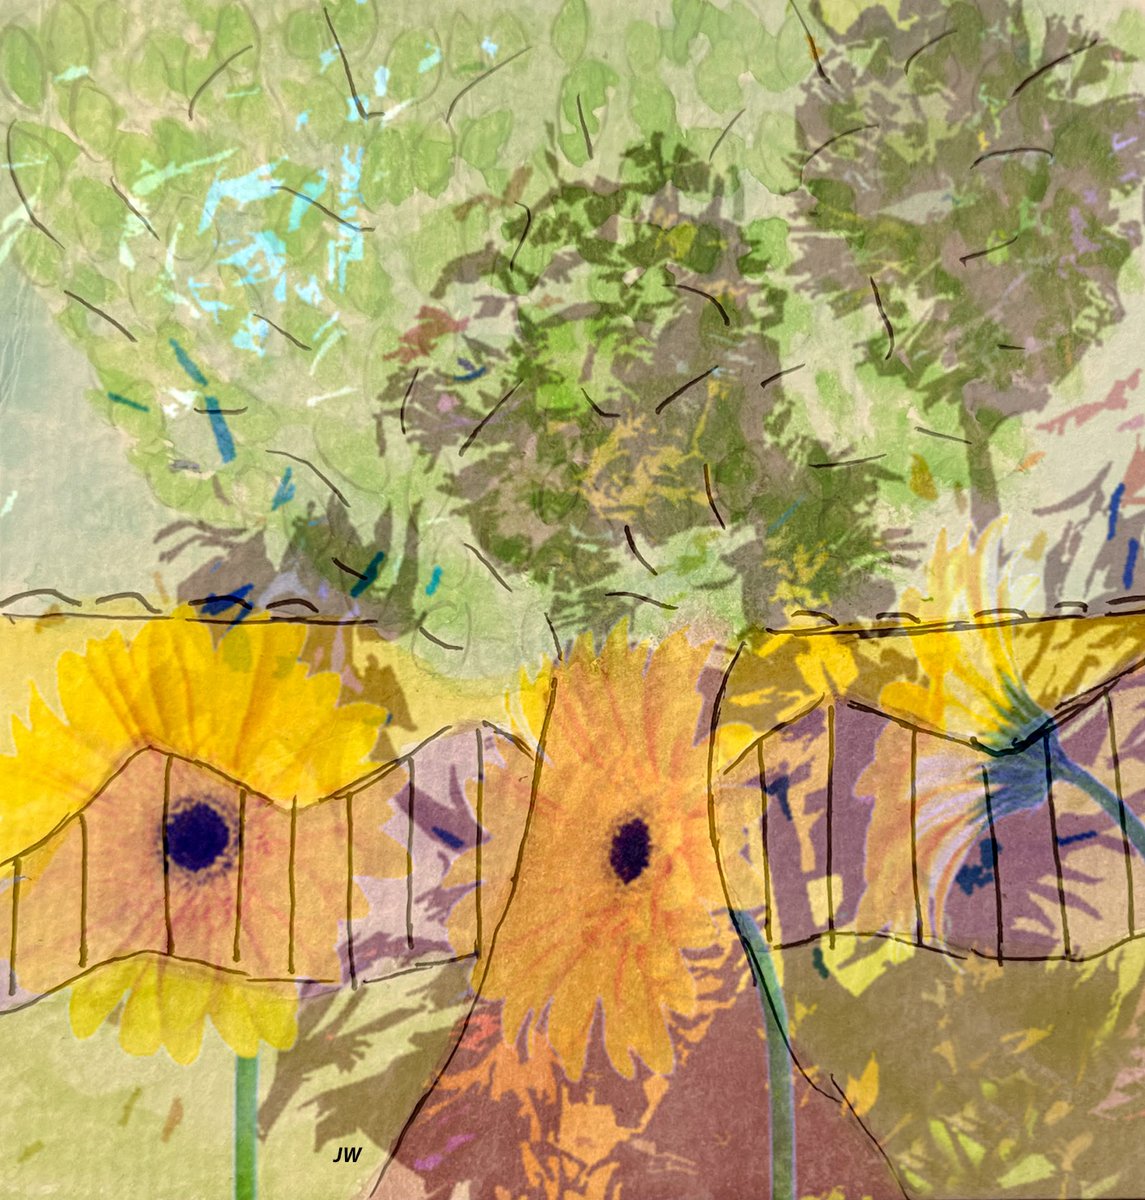 'Garden Bright'
#art #garden #flowers #tree #fence #abstract #landscape #watercolor #mixedmedia #computercollage #digitalpainting #dailyart #sundayart #recycledart #layers #nature #artist #beautiful #creative #janicewilliamsart
artstudio99.com